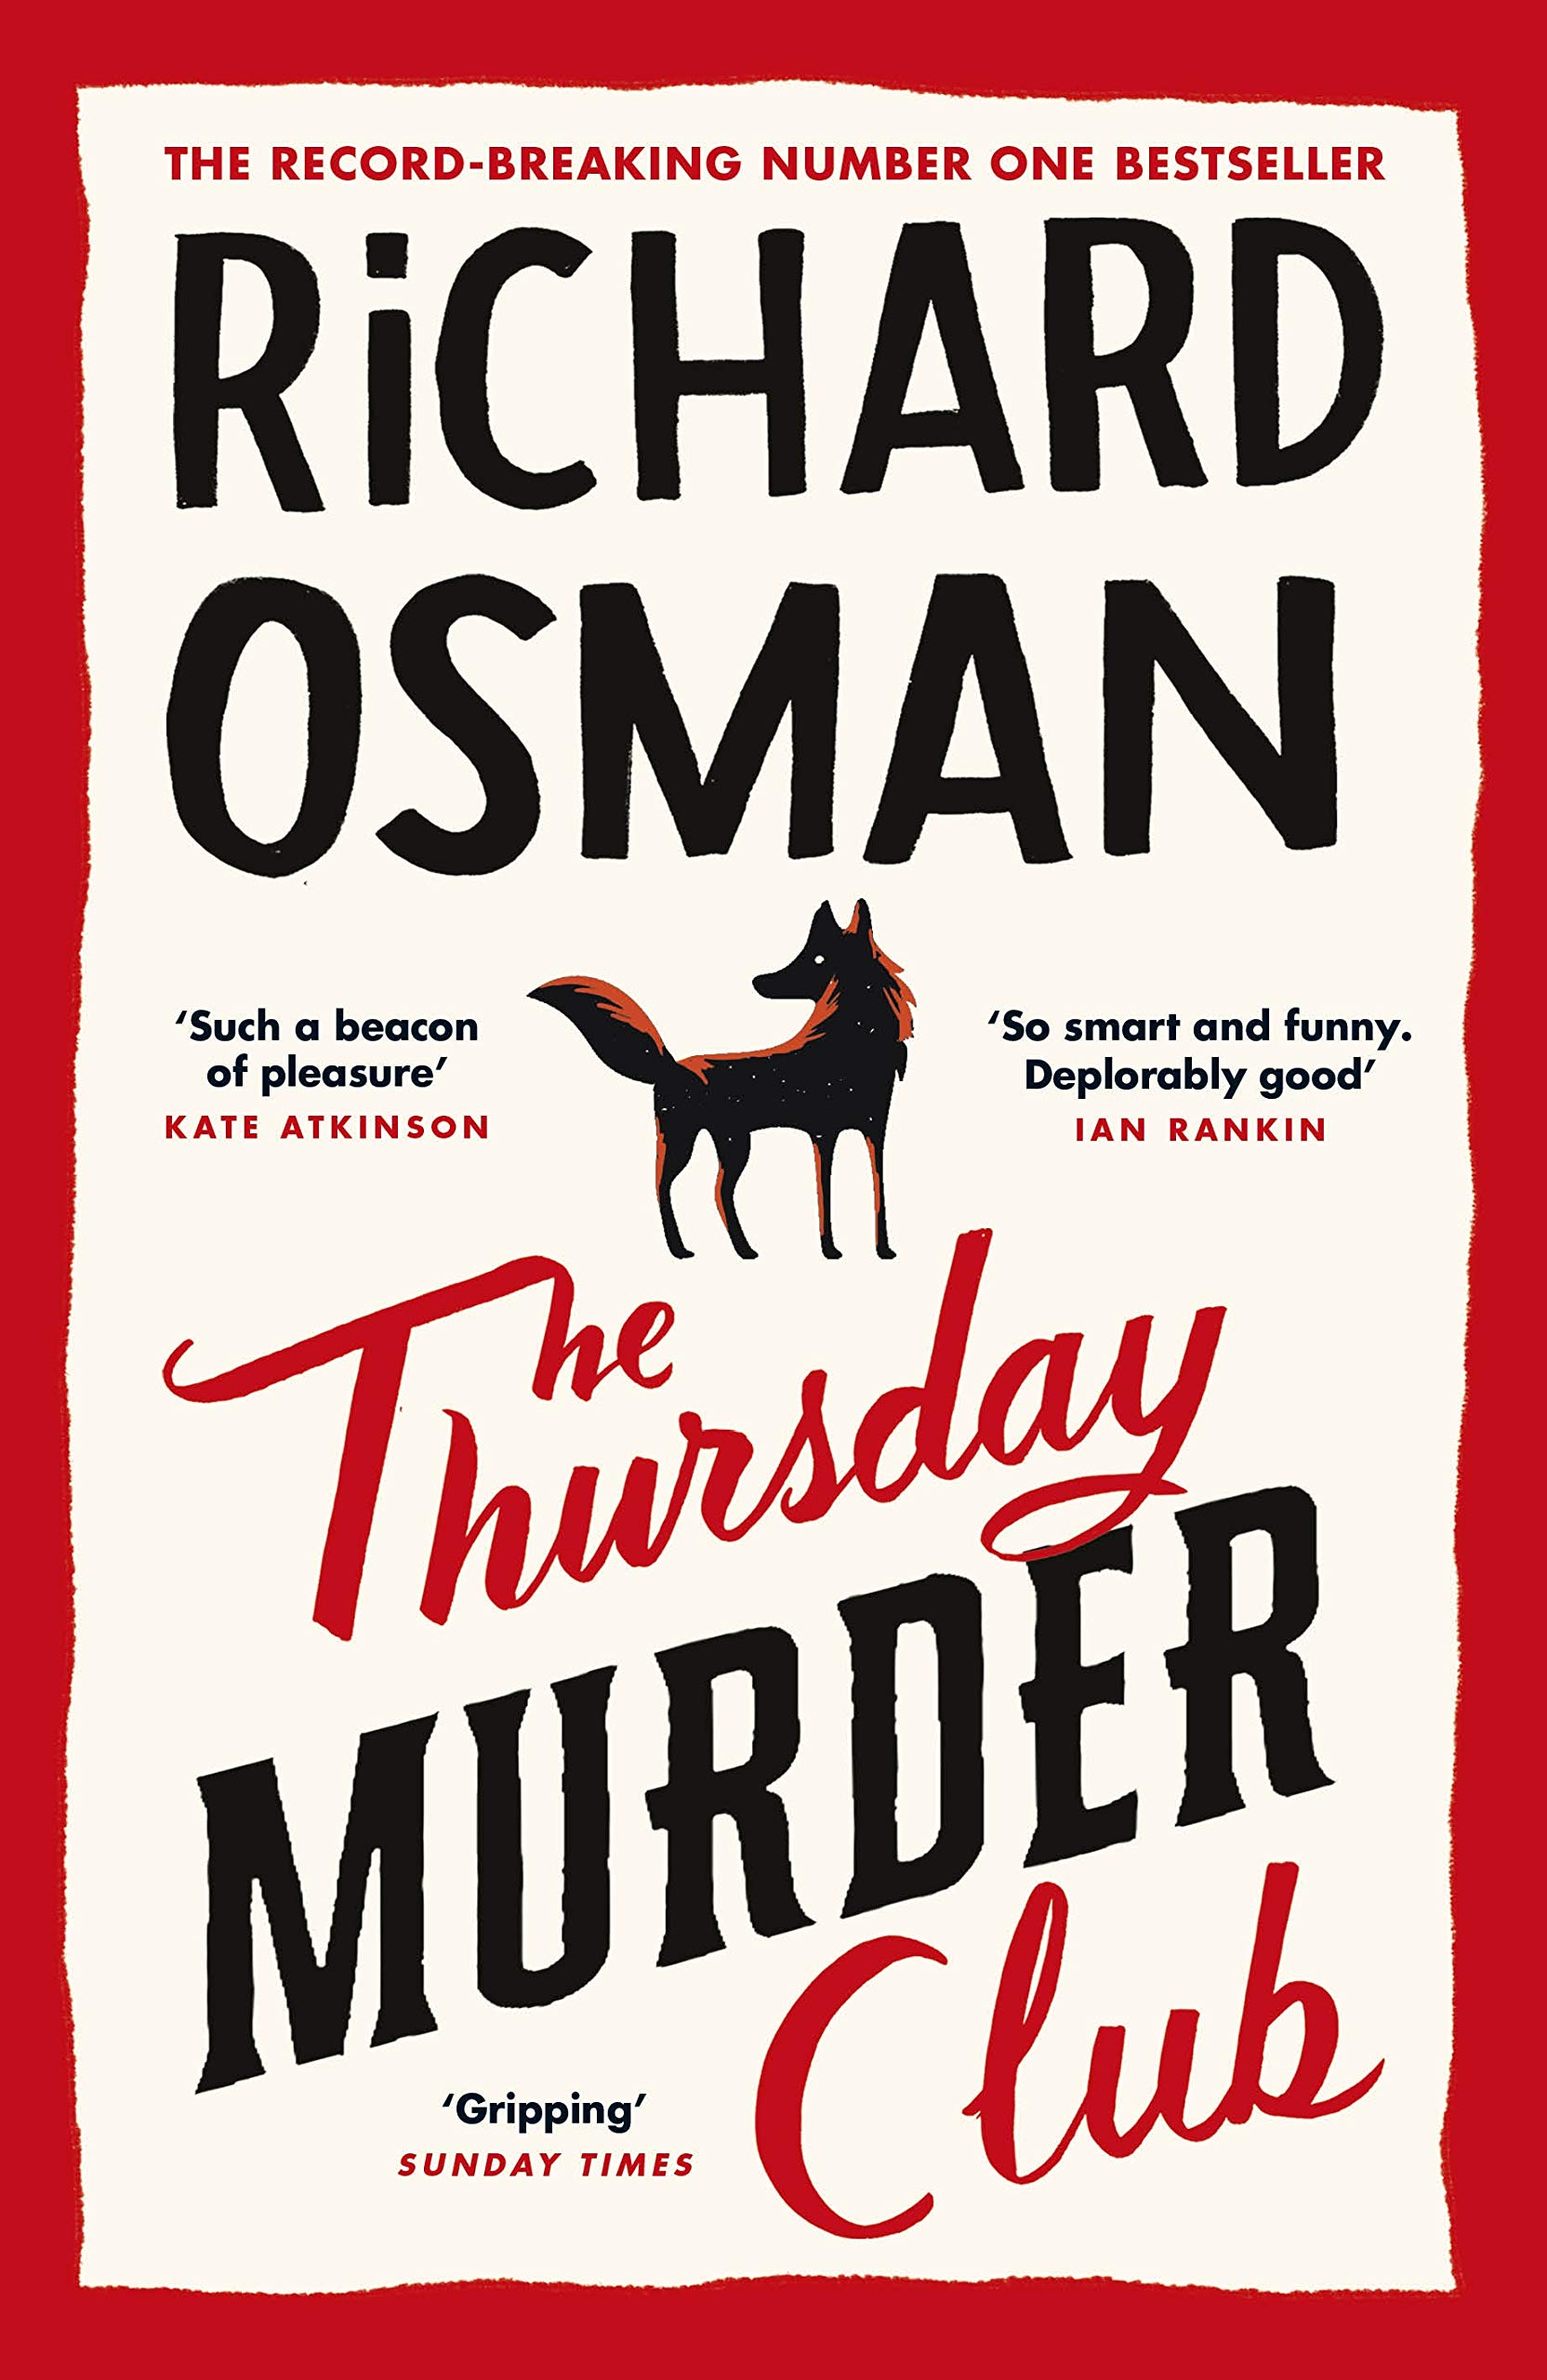 Cover of Thursday Murder Club by Richard Osmam